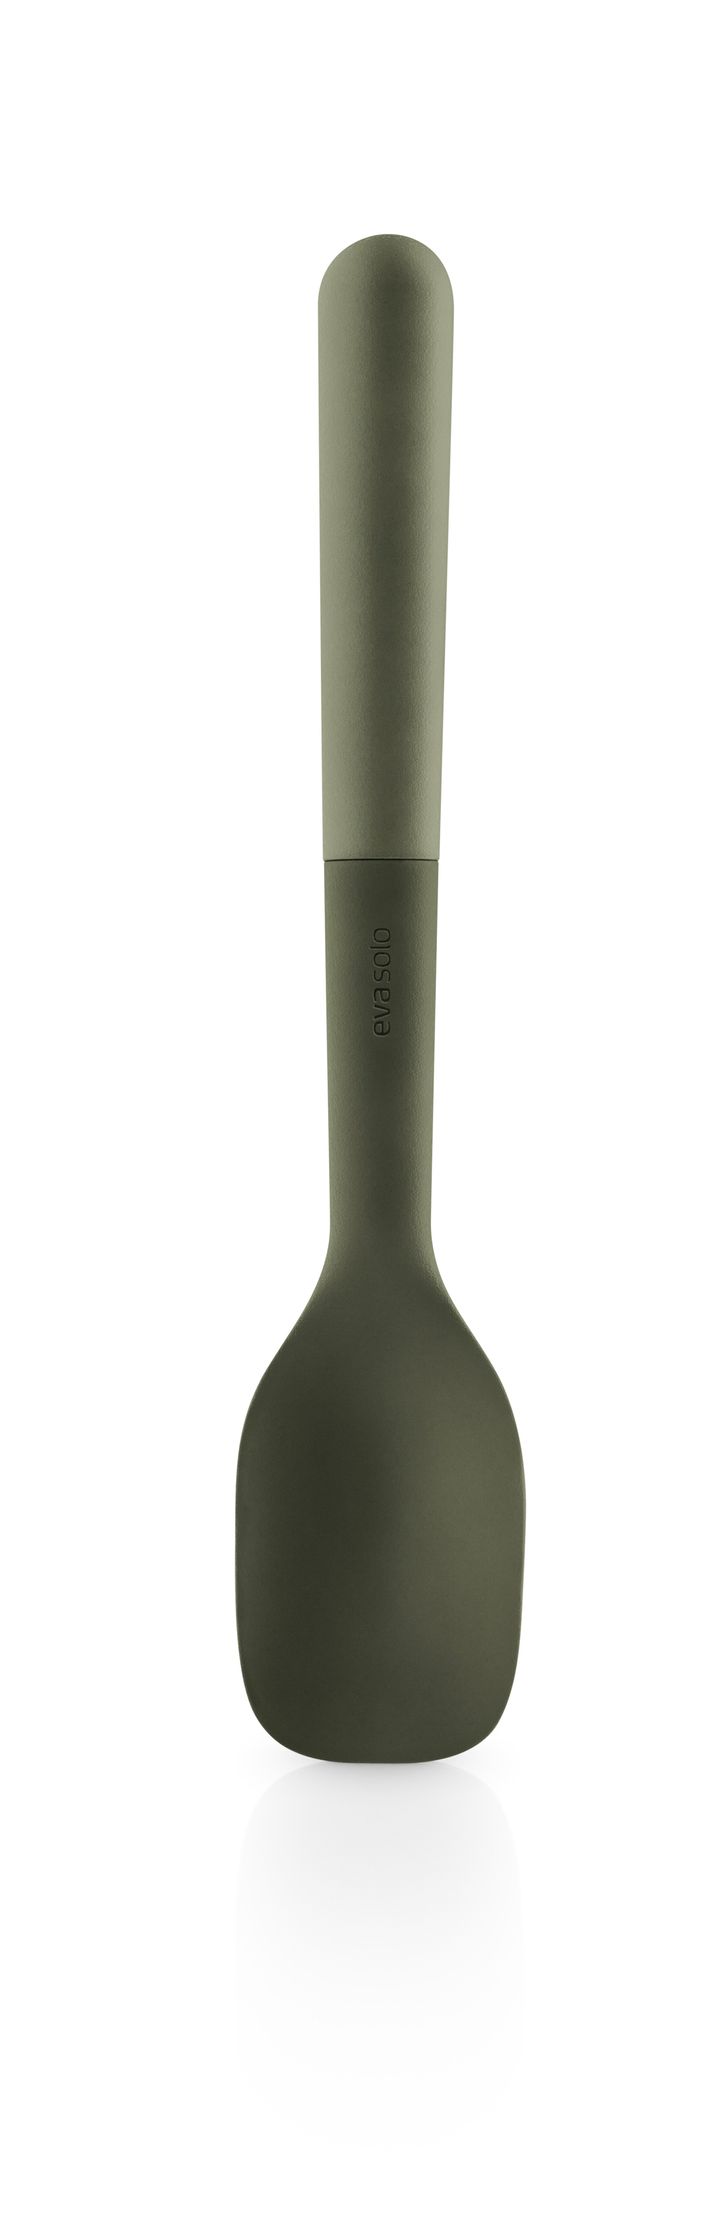 Petite louche Green tool  25,5 cm - Vert - Eva Solo